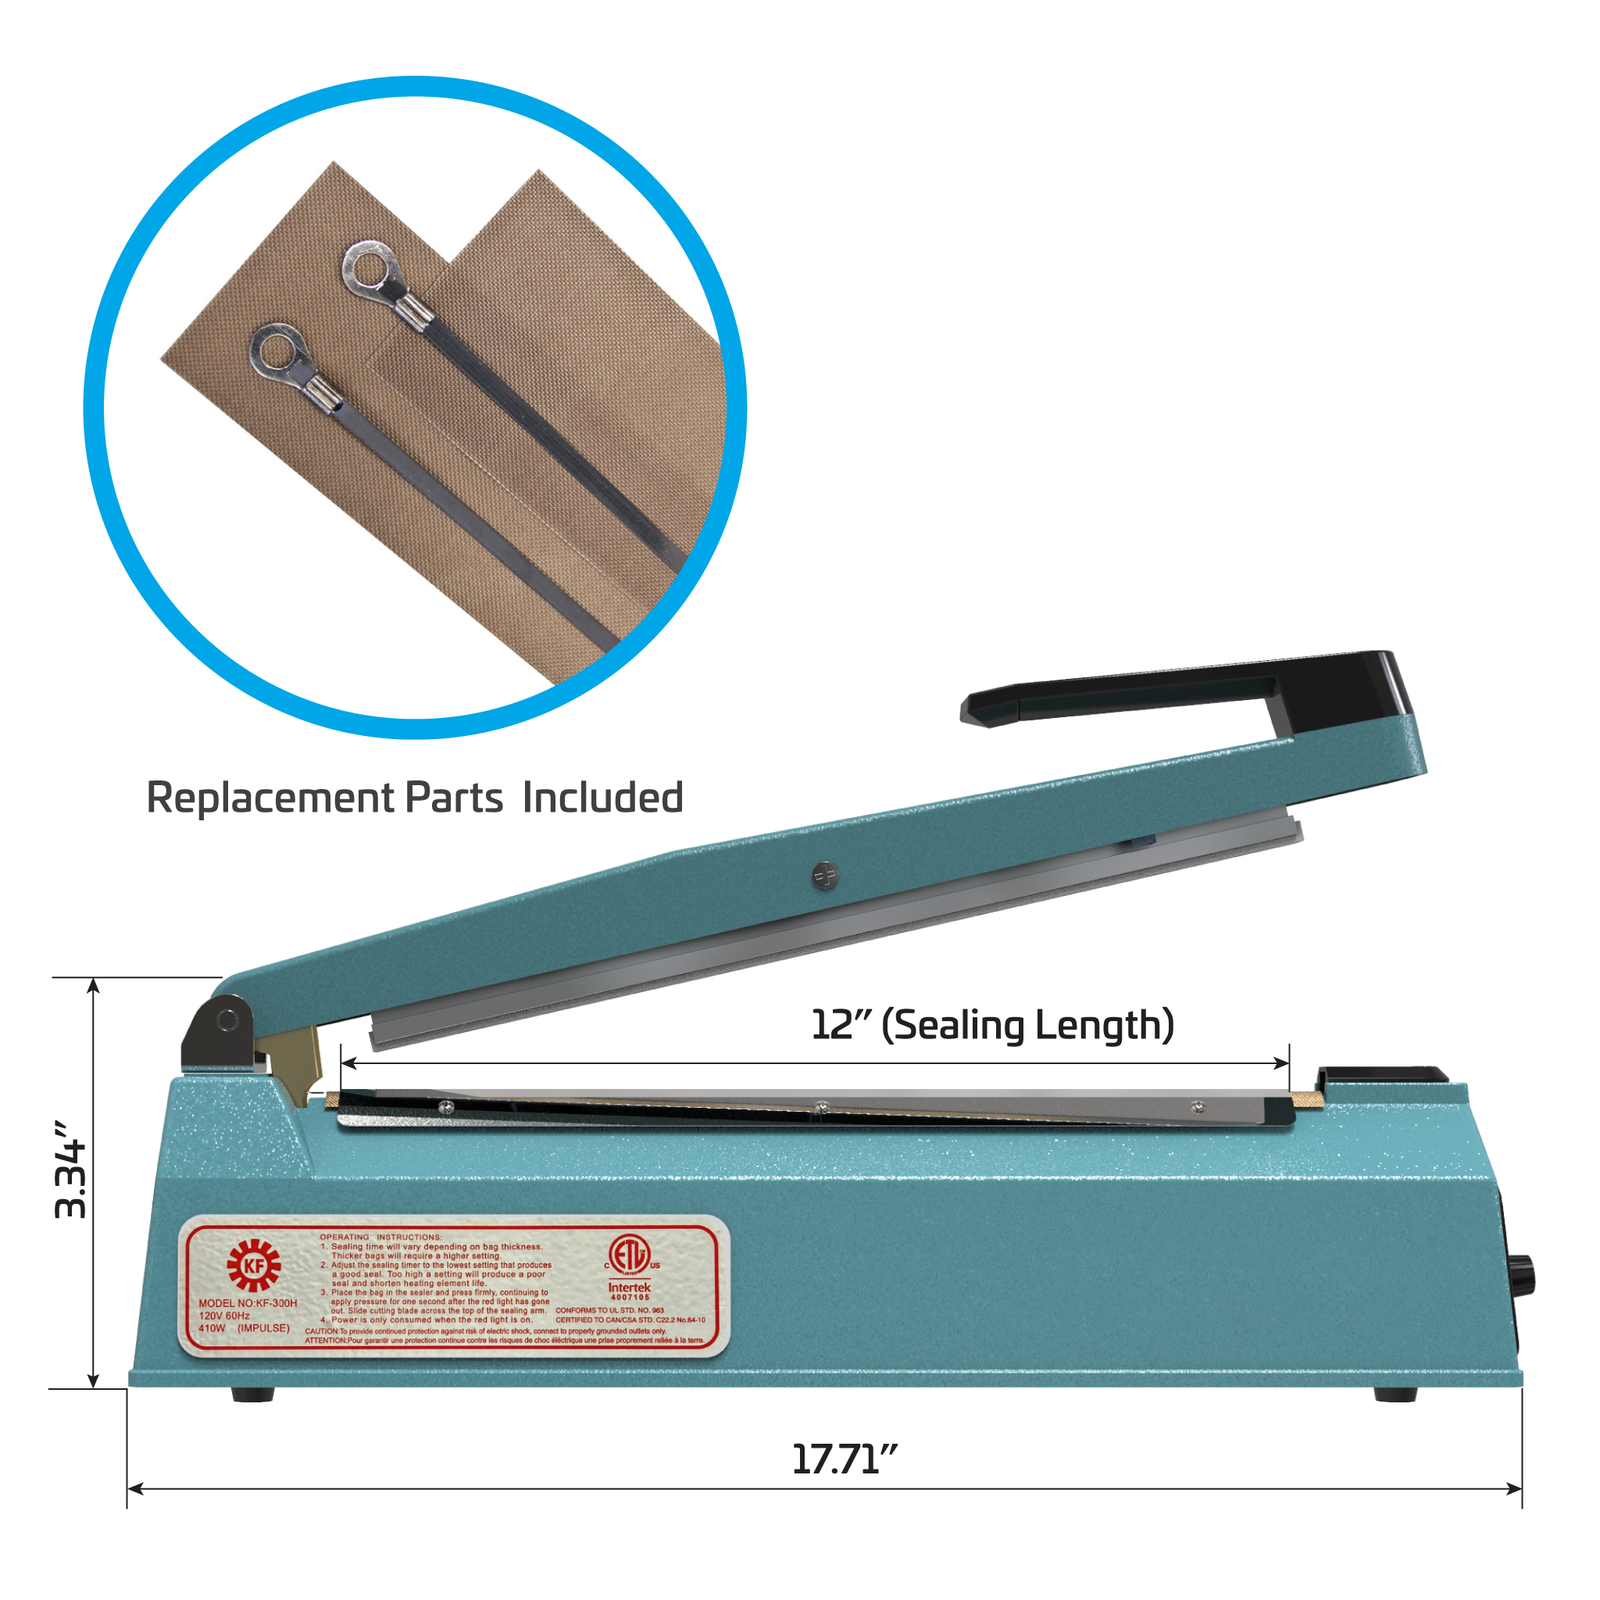 Portable manual impulse bag sealer with machine measurements. Feature reads 